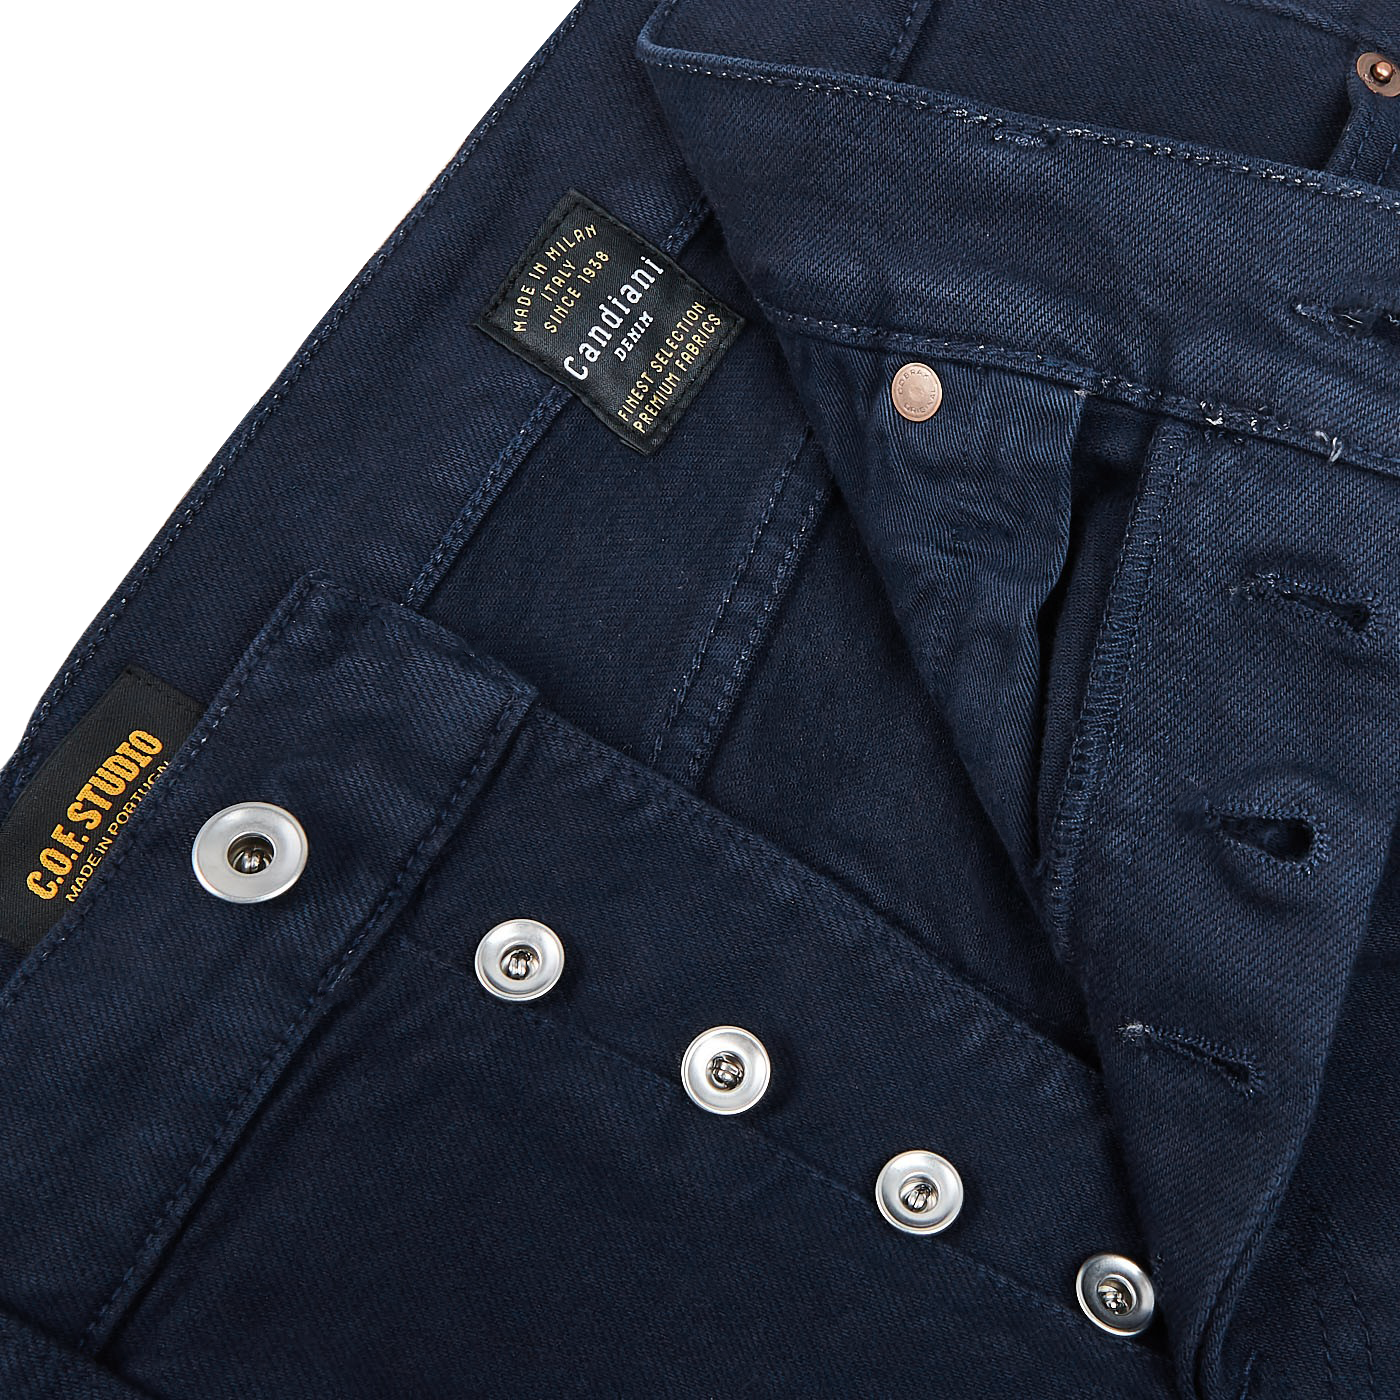 C.O.F Studio | Navy Blue Candiani Cotton M7 Jeans